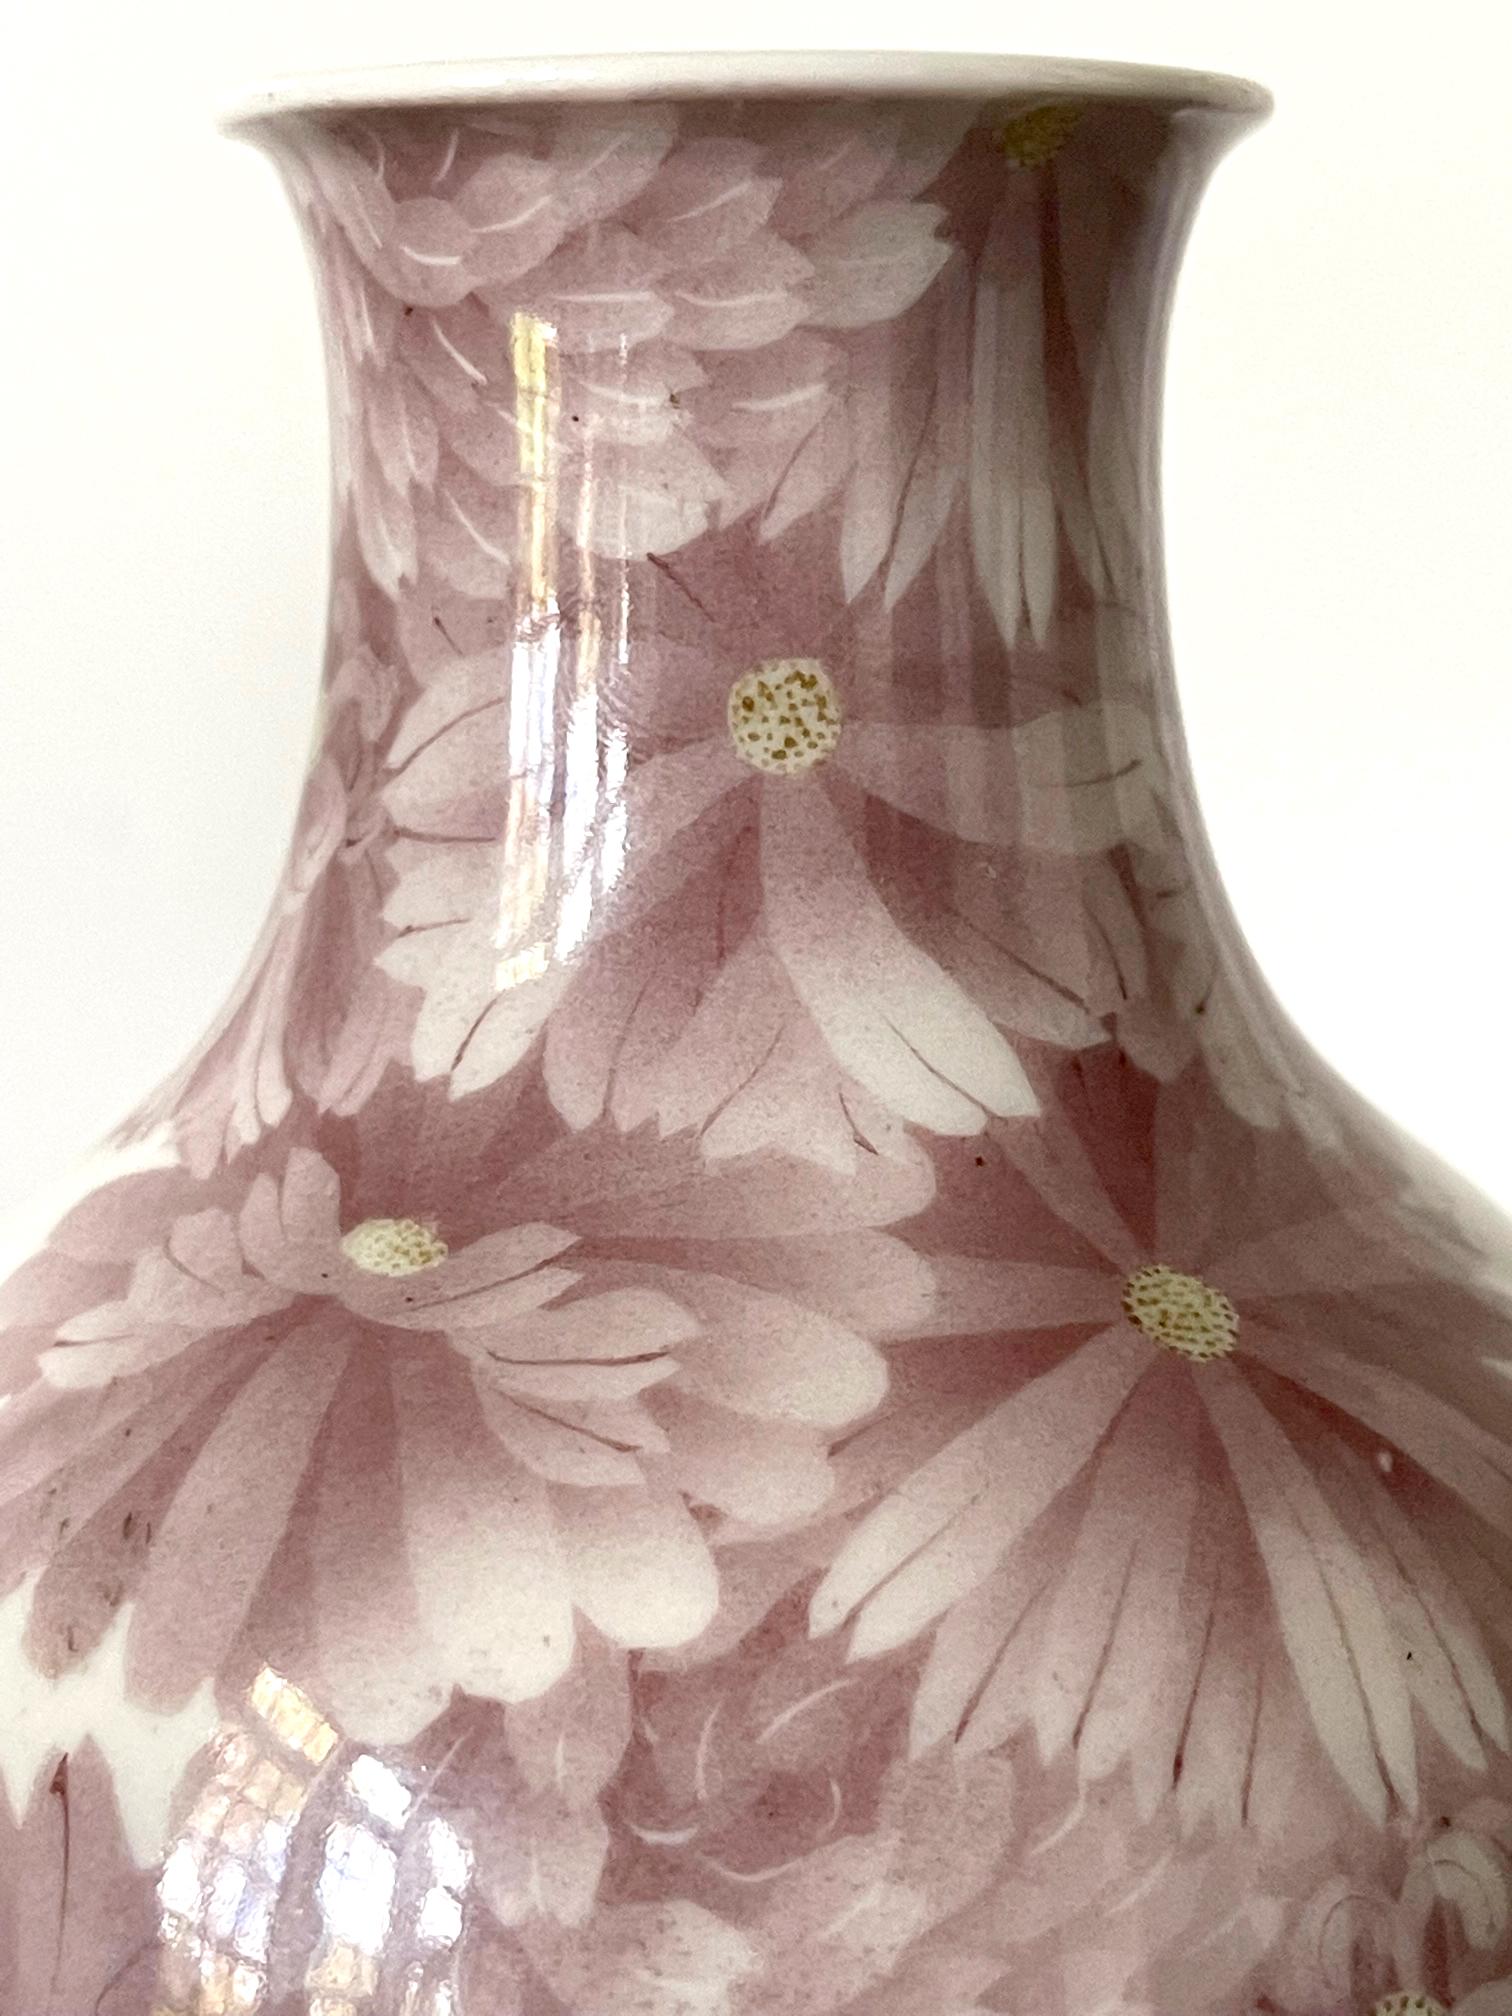 Japanese Ceramic Vase with Delicate Carvings by Makuzu Kozan Meiji Period For Sale 6